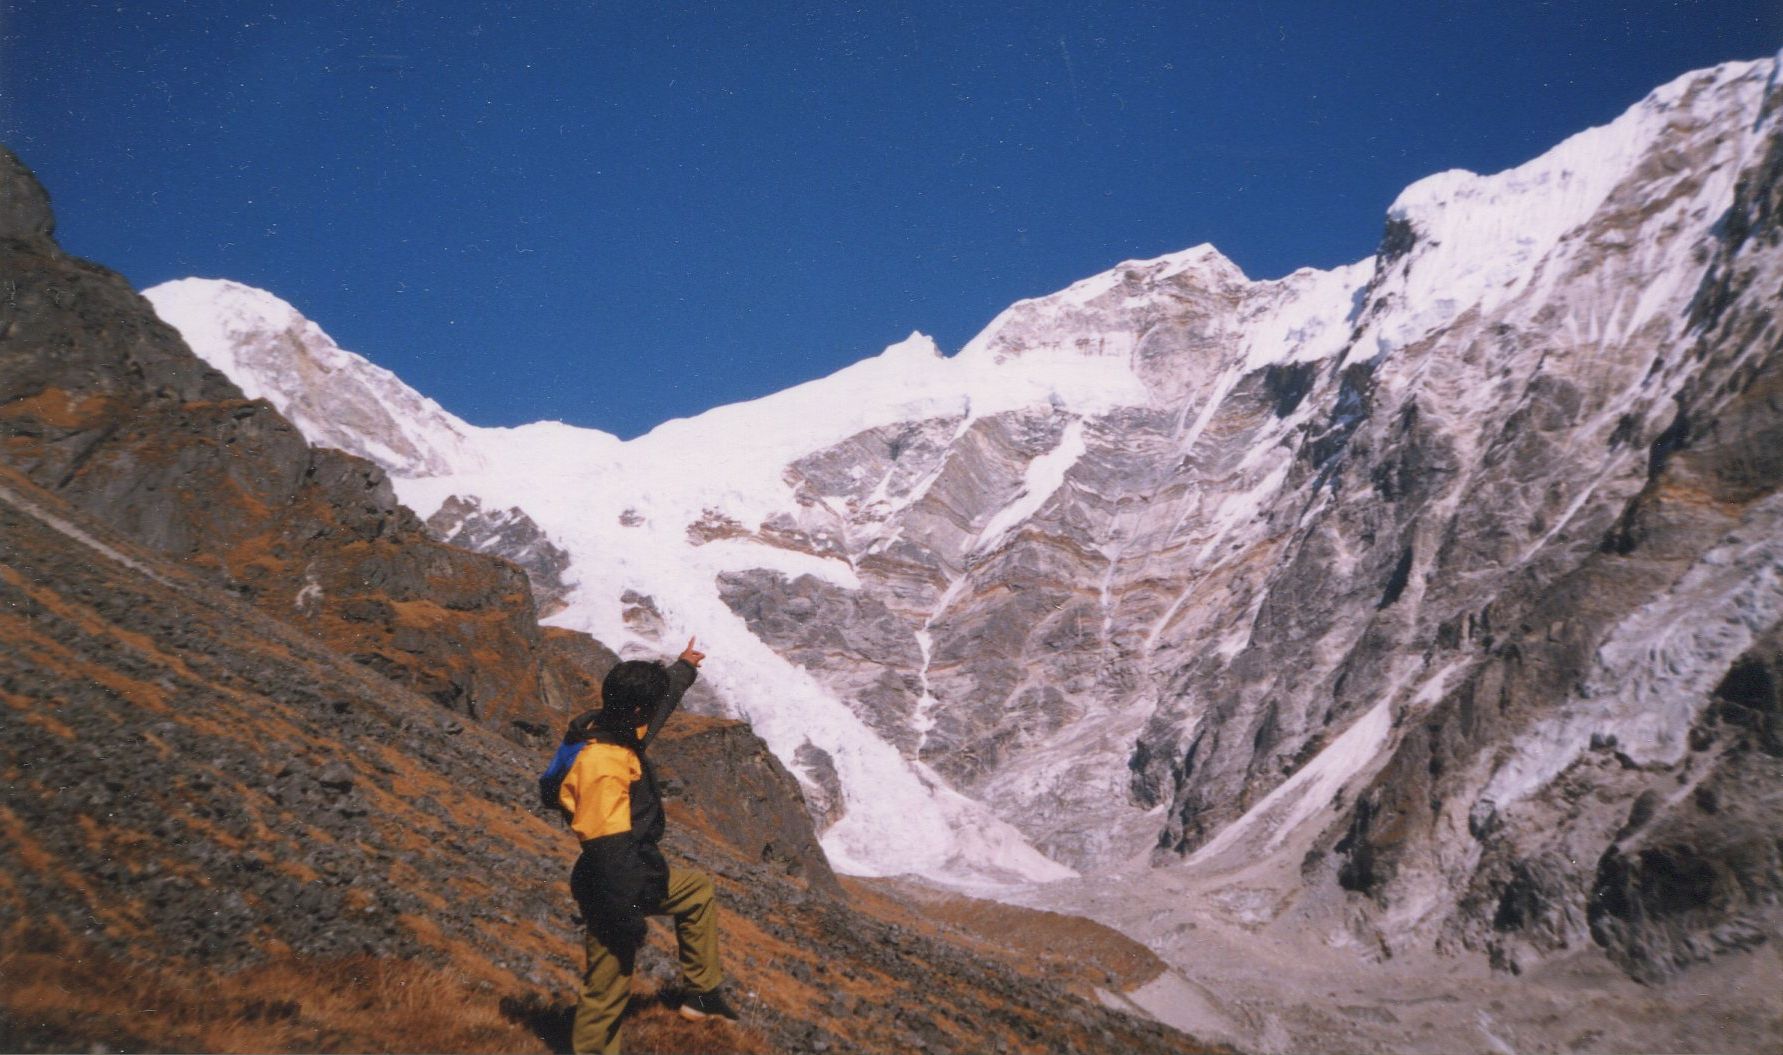 Darwa Sherpa beneath the Zurmacher Glacier at the head of the Likhu Khola Valley